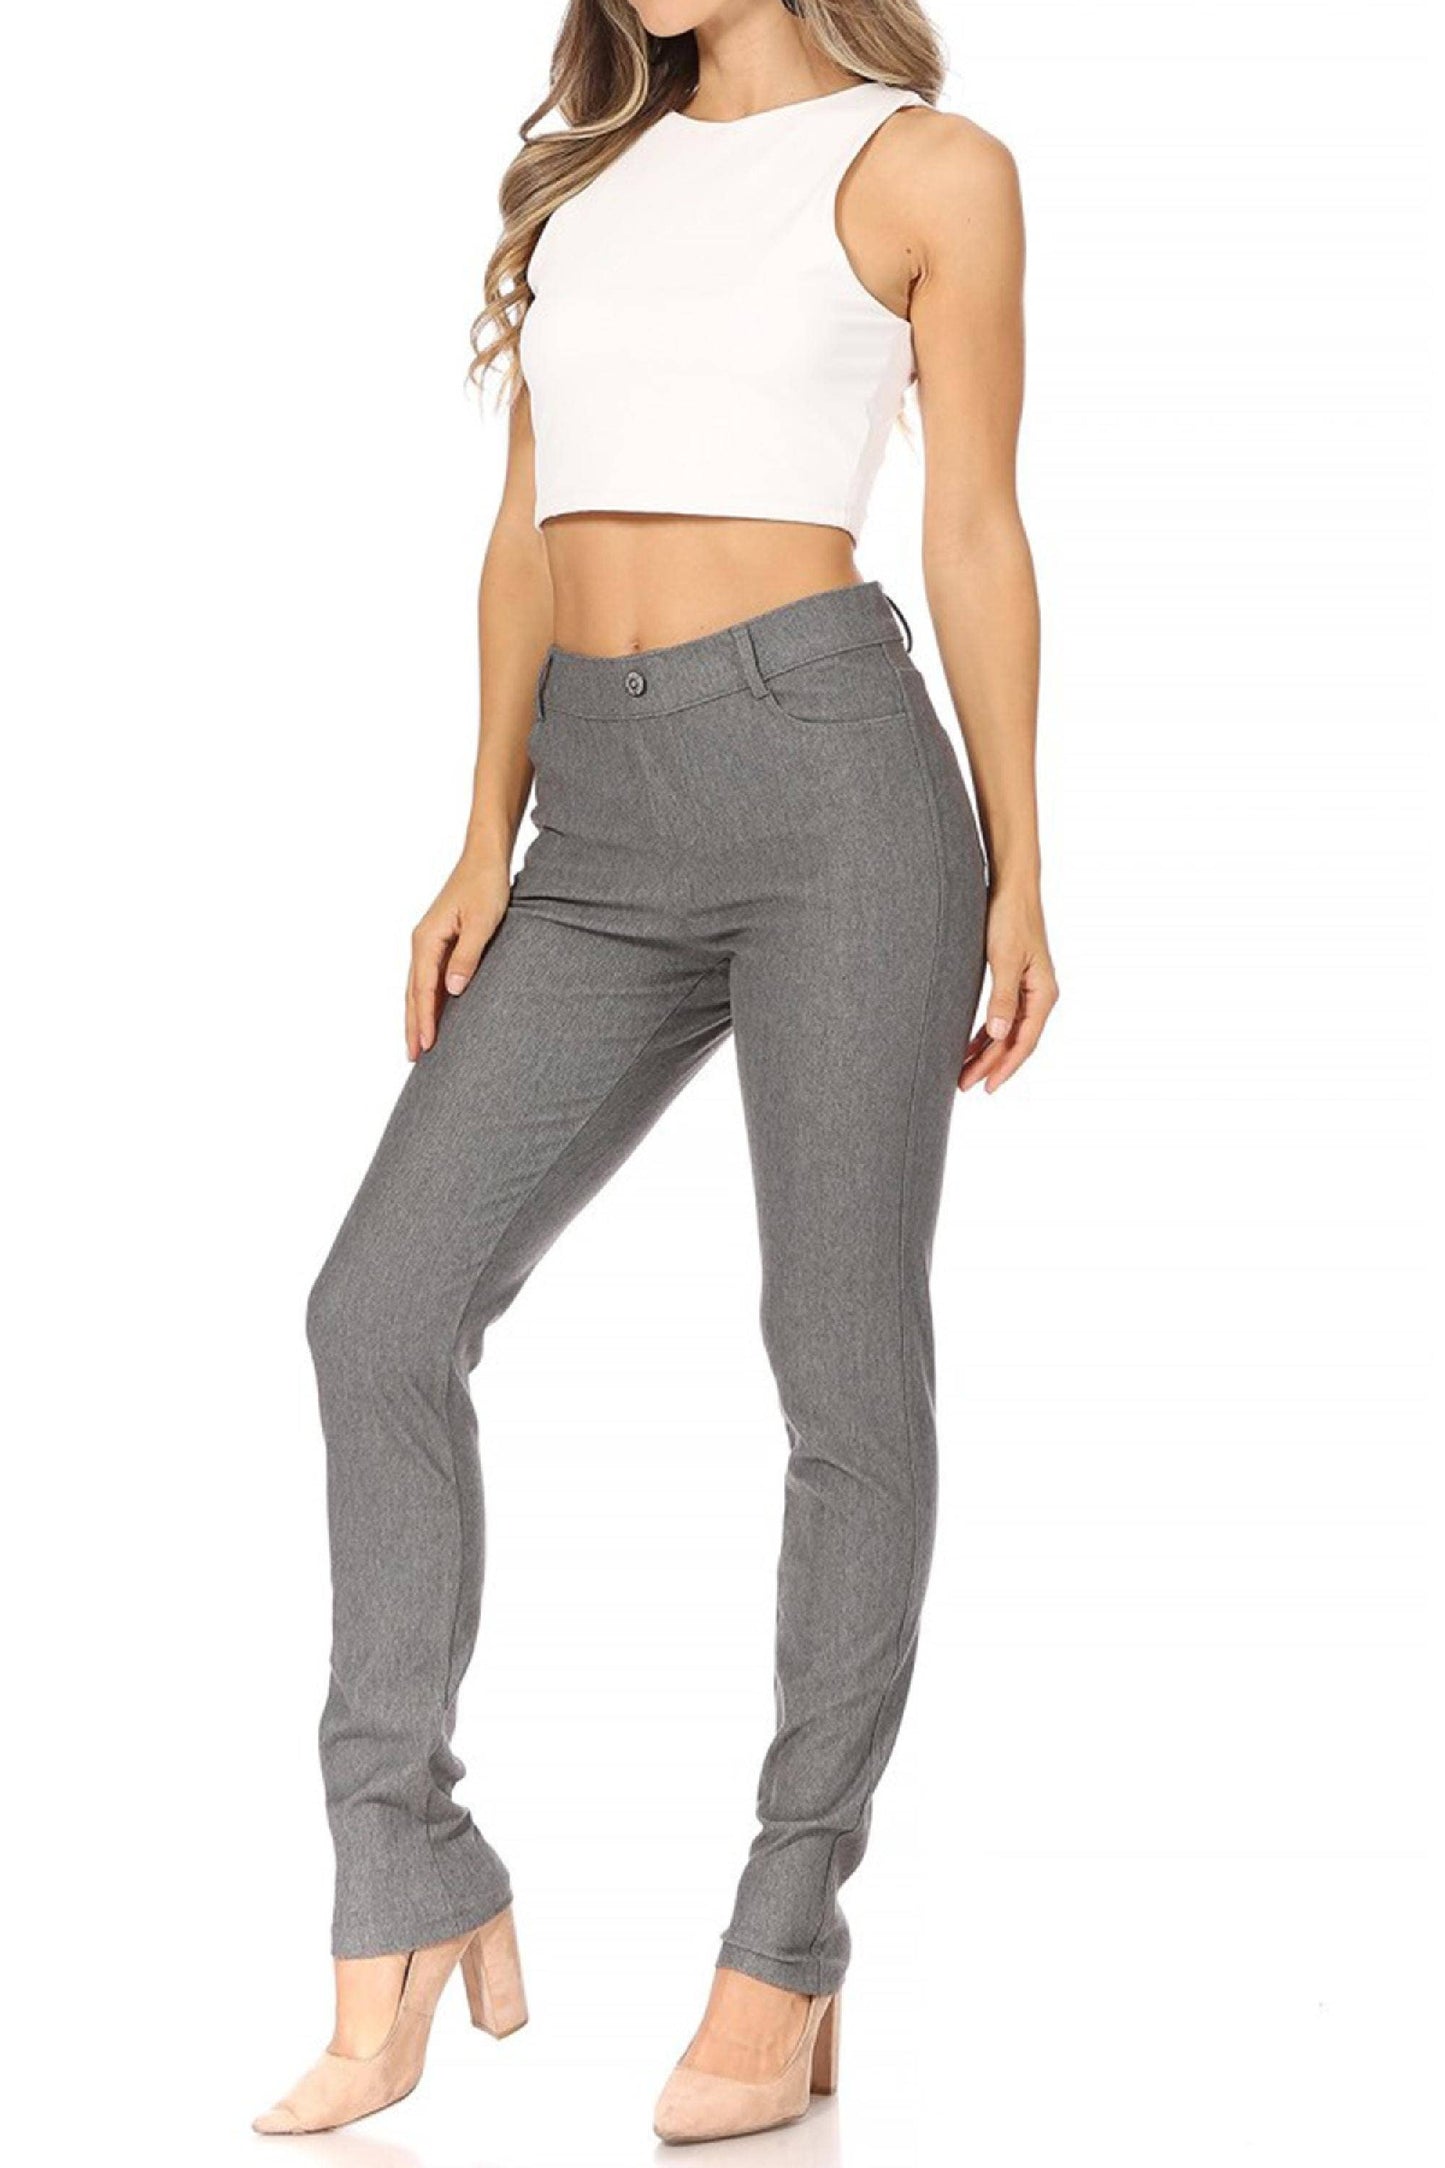 Women's Casual Comfy Jeggings/Jeans/Leggings/Pants:  Gray